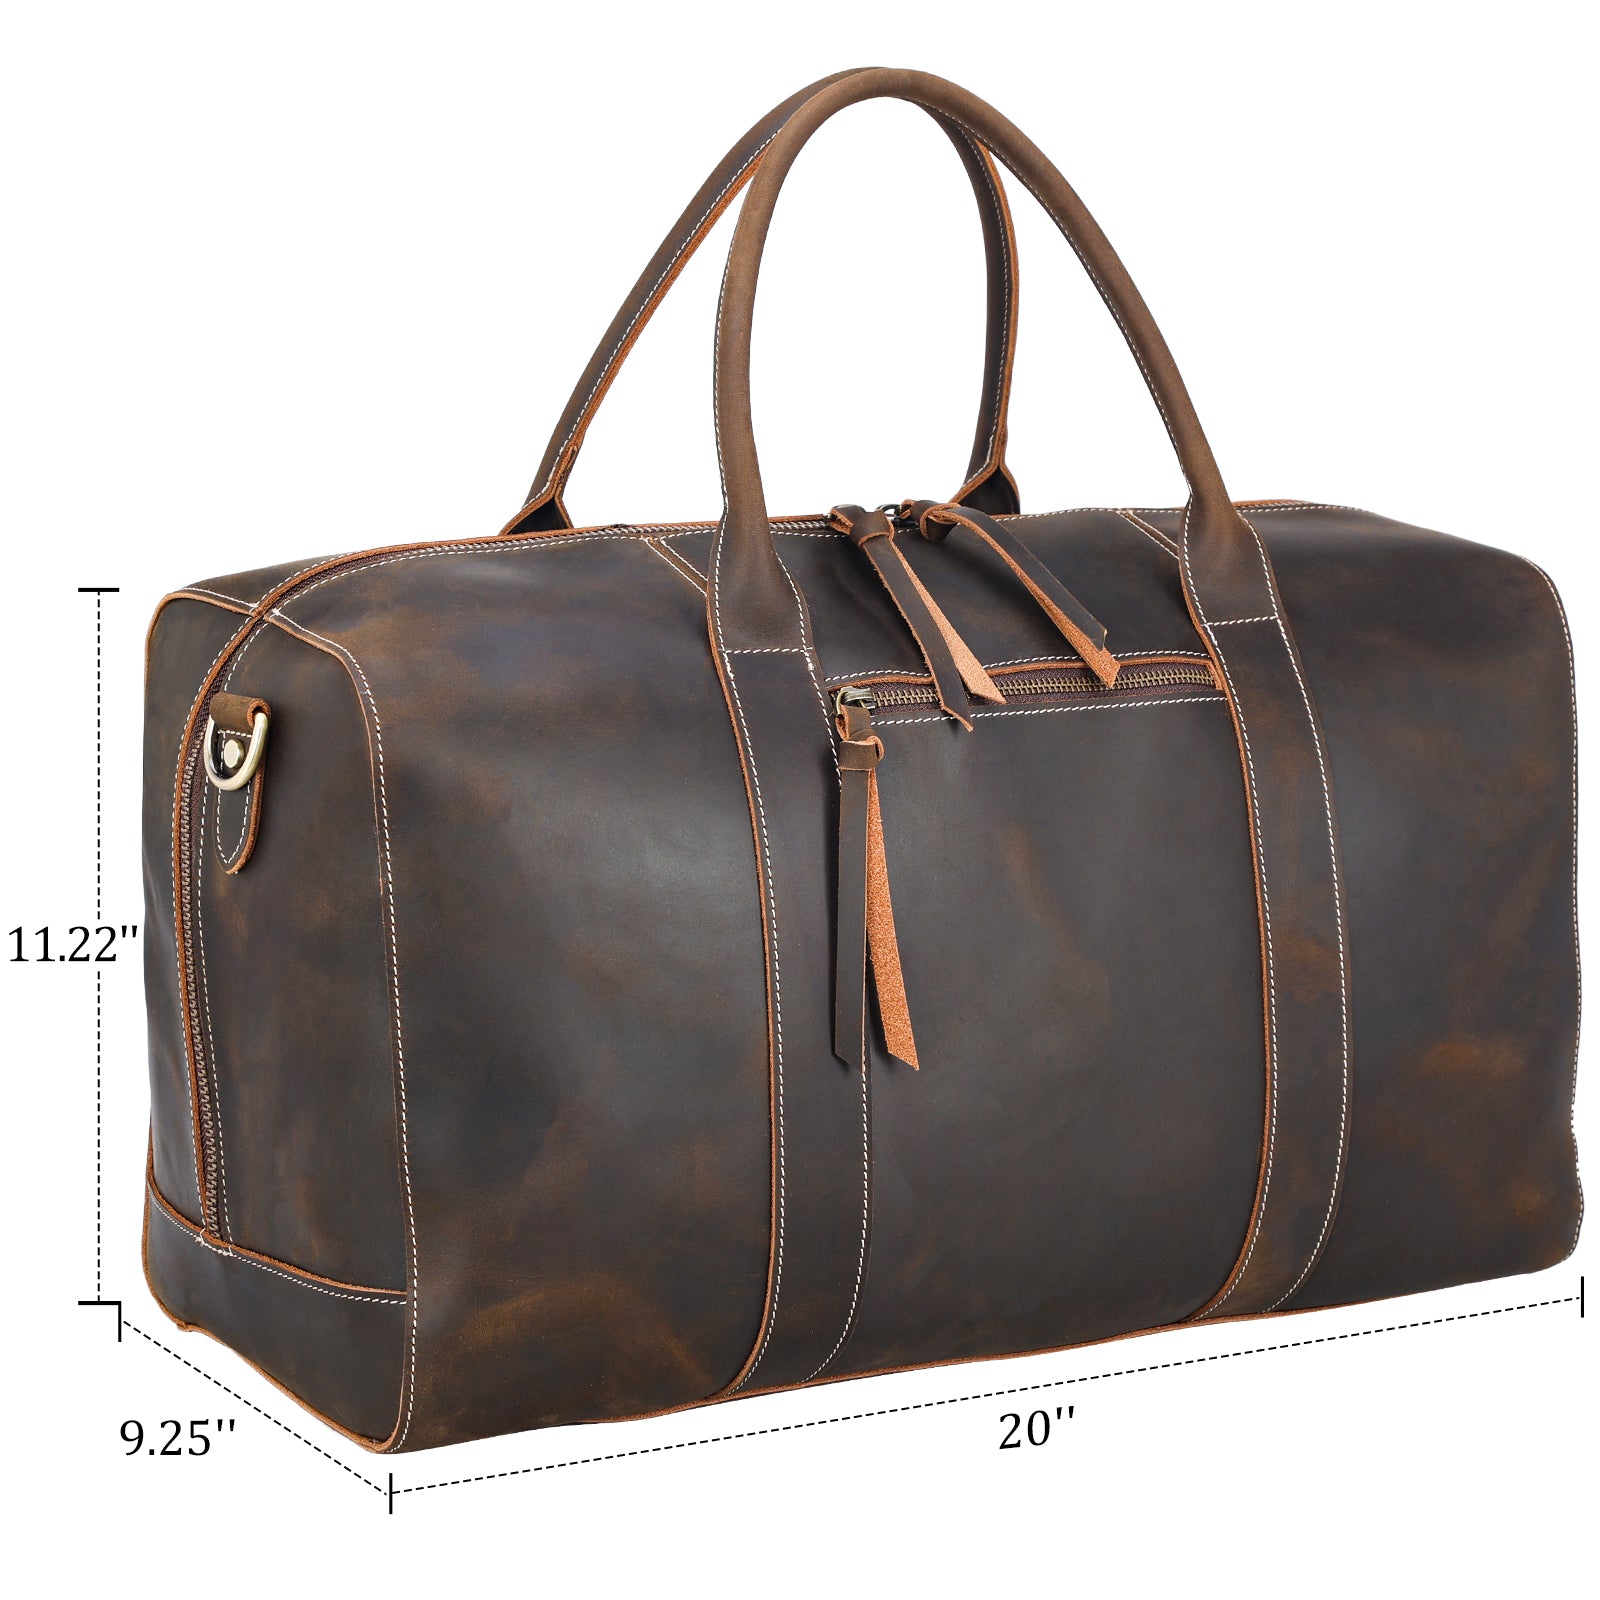 Polare 20" Leather Duffel Bag Overnight Weekender Bag (Dimension)